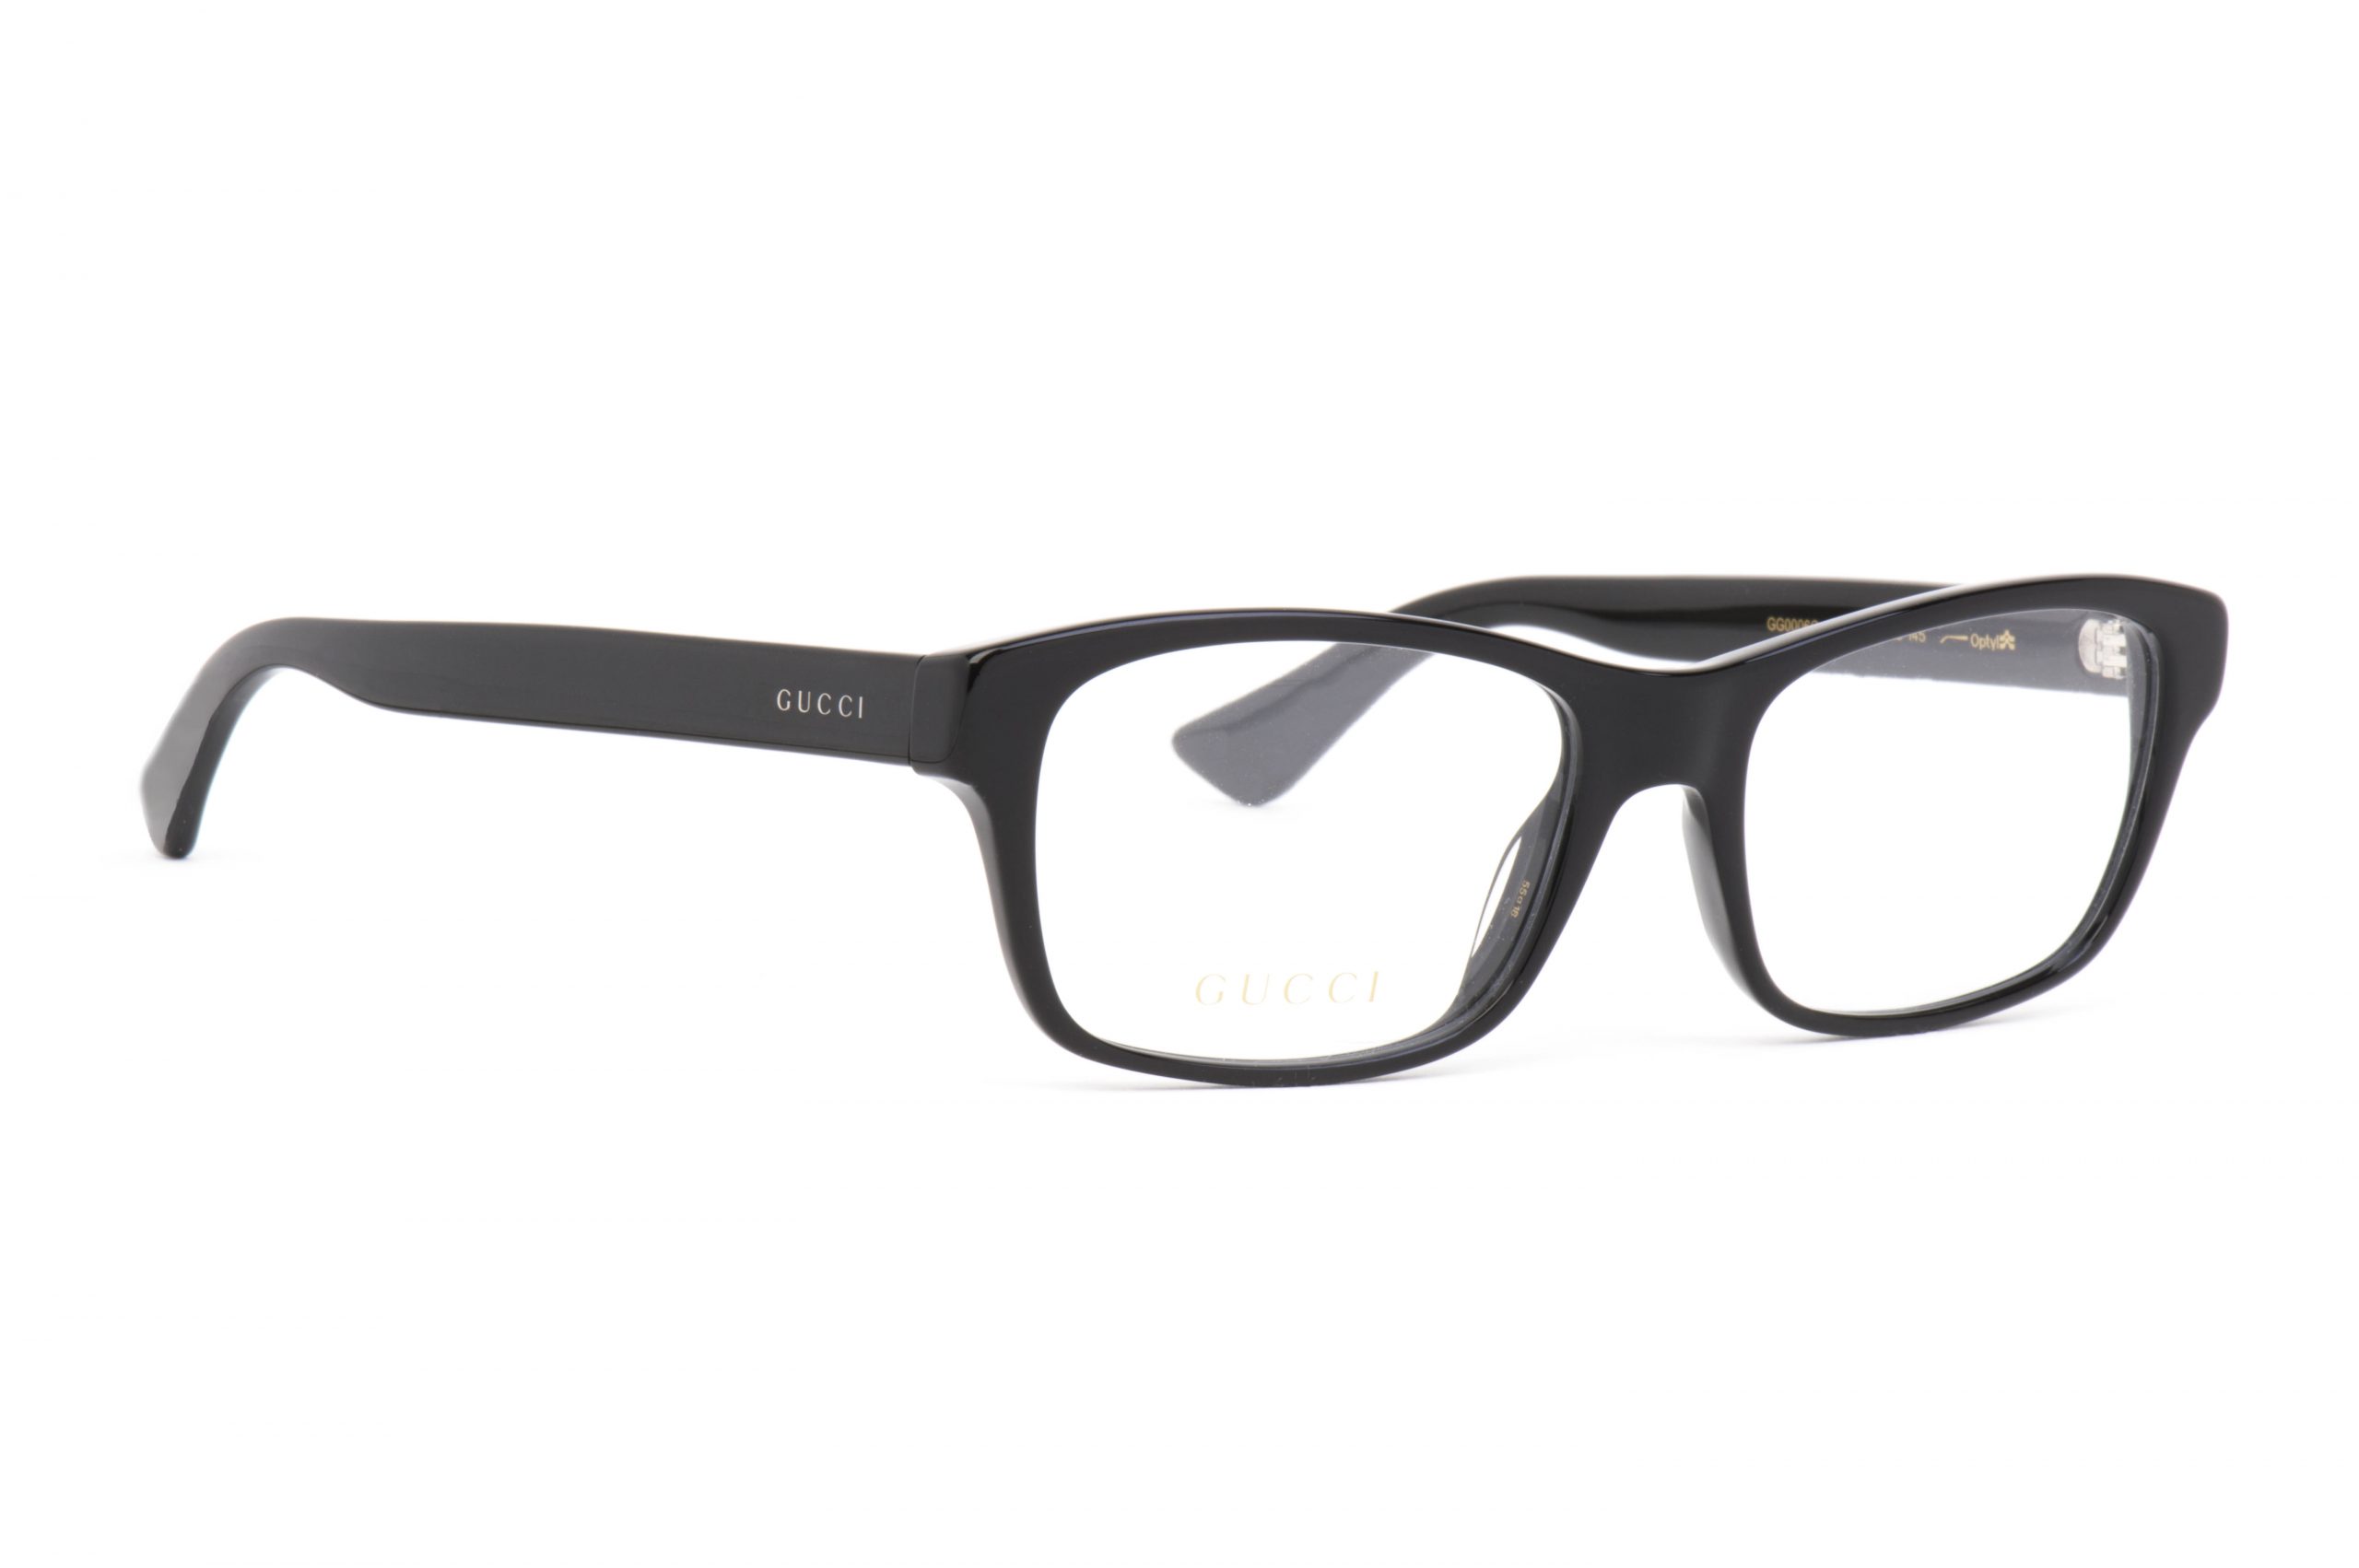 GUCCI Eyeglasses GG0006O 005 | عالم النظارات السعودية